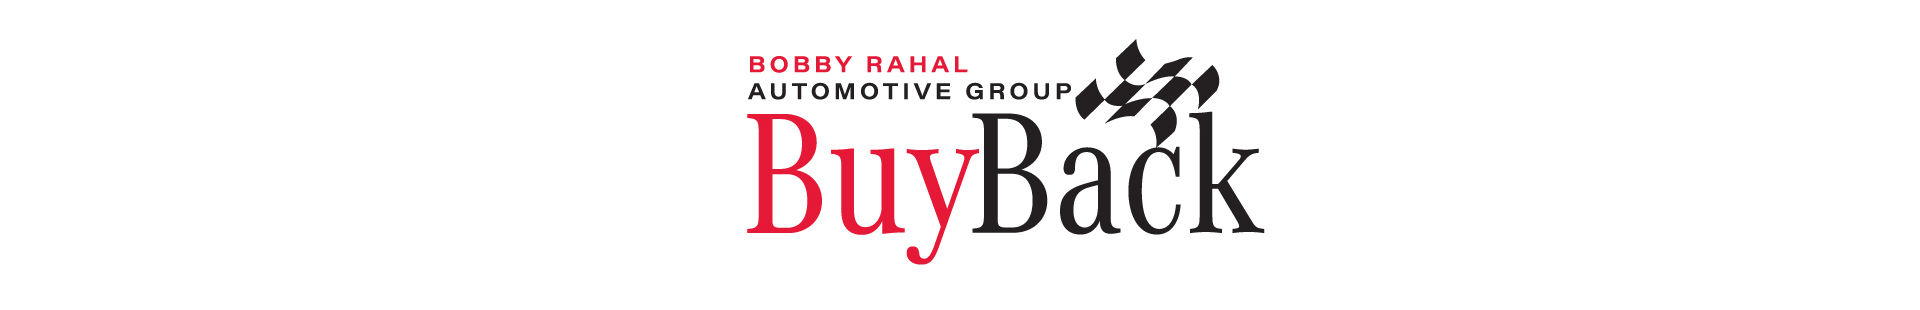 Bobby Rahal Automotive Group Buy Back